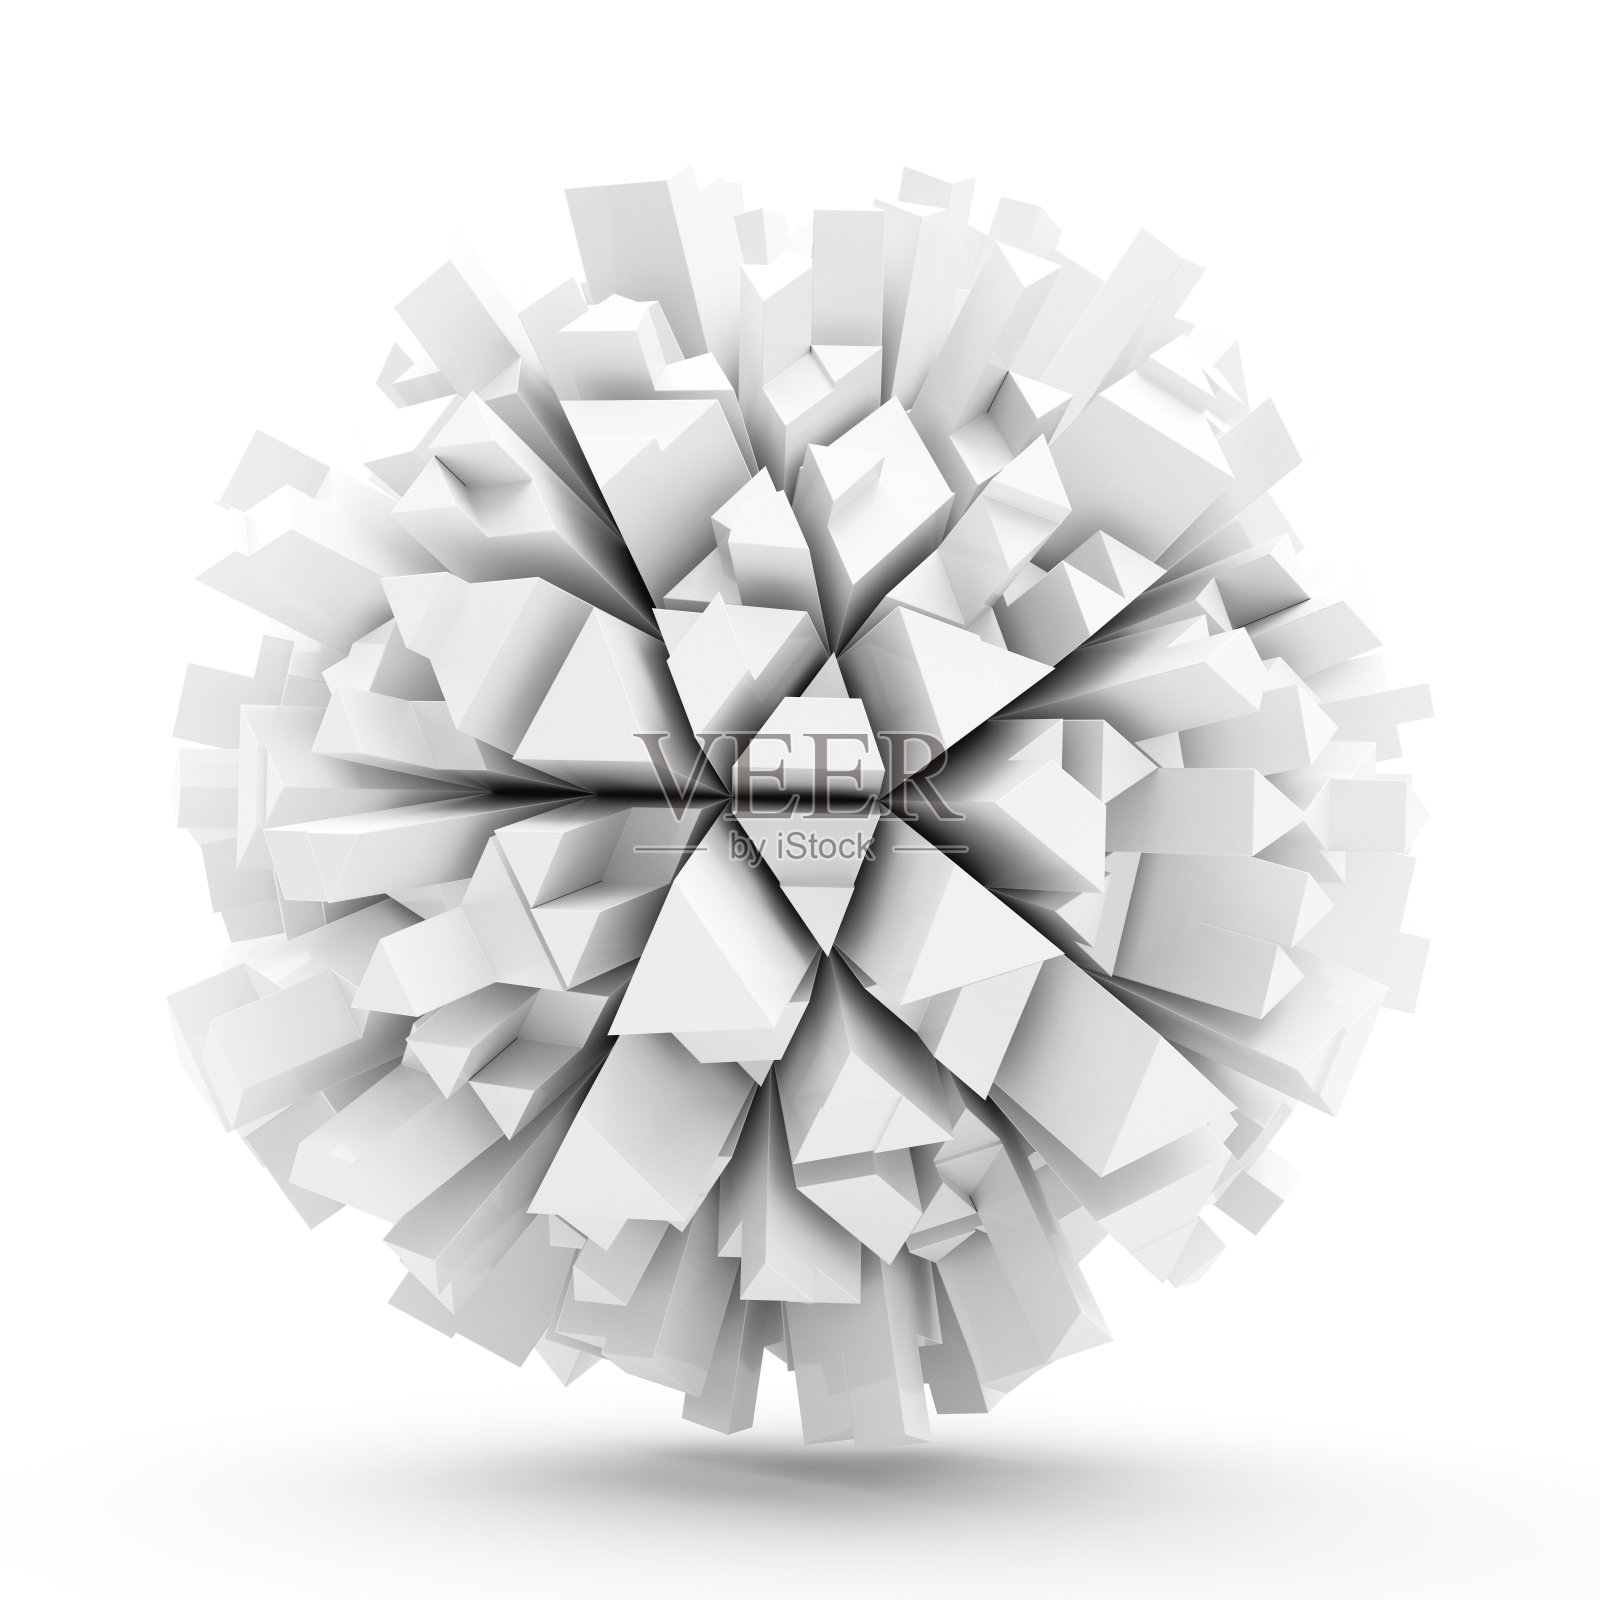 3D渲染抽象球体在白色背景插画图片素材